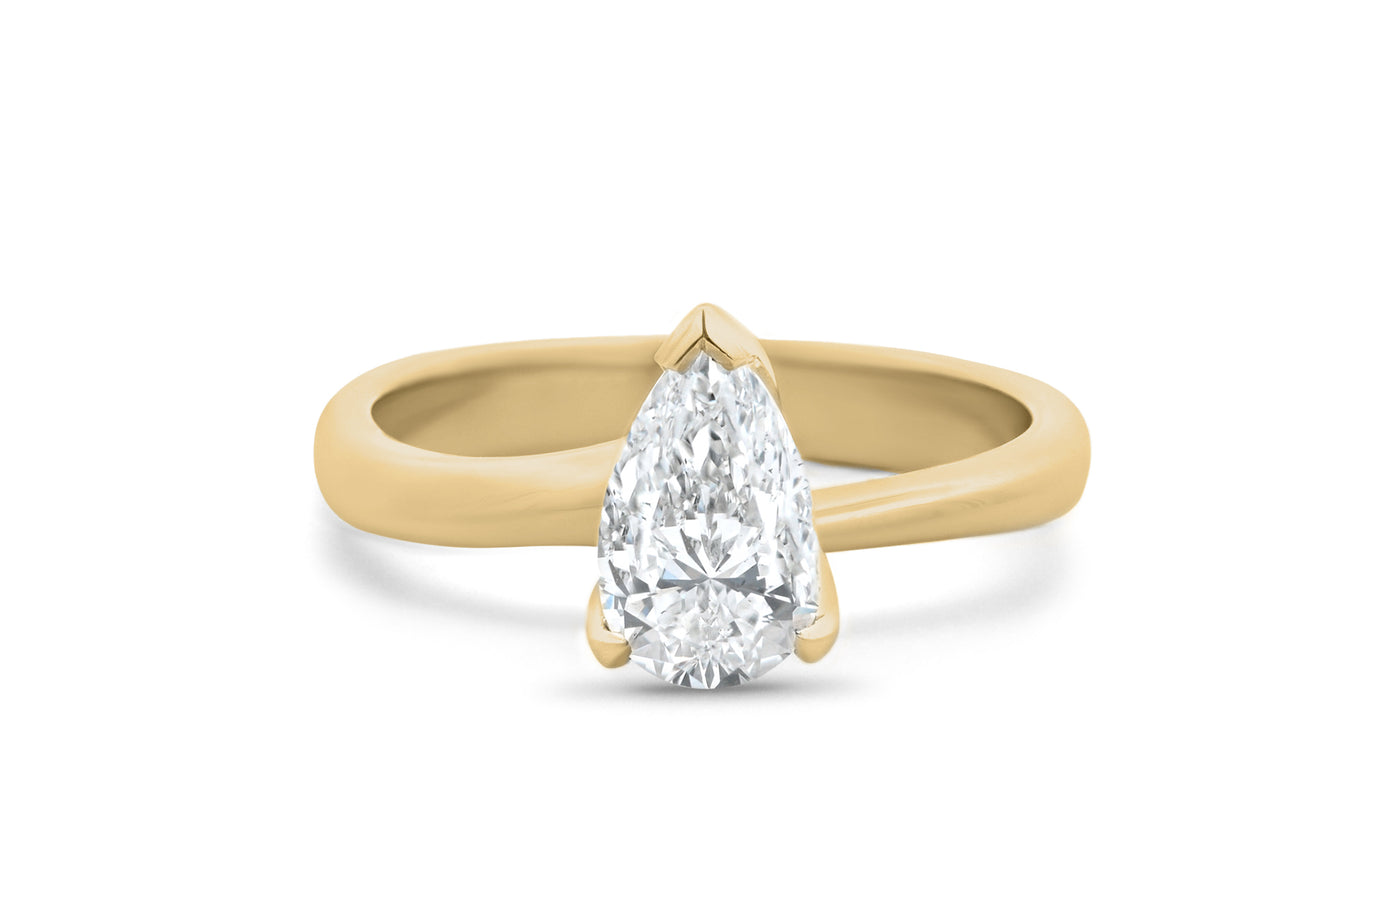 Silhouette: Pear Cut Diamond Solitaire Ring